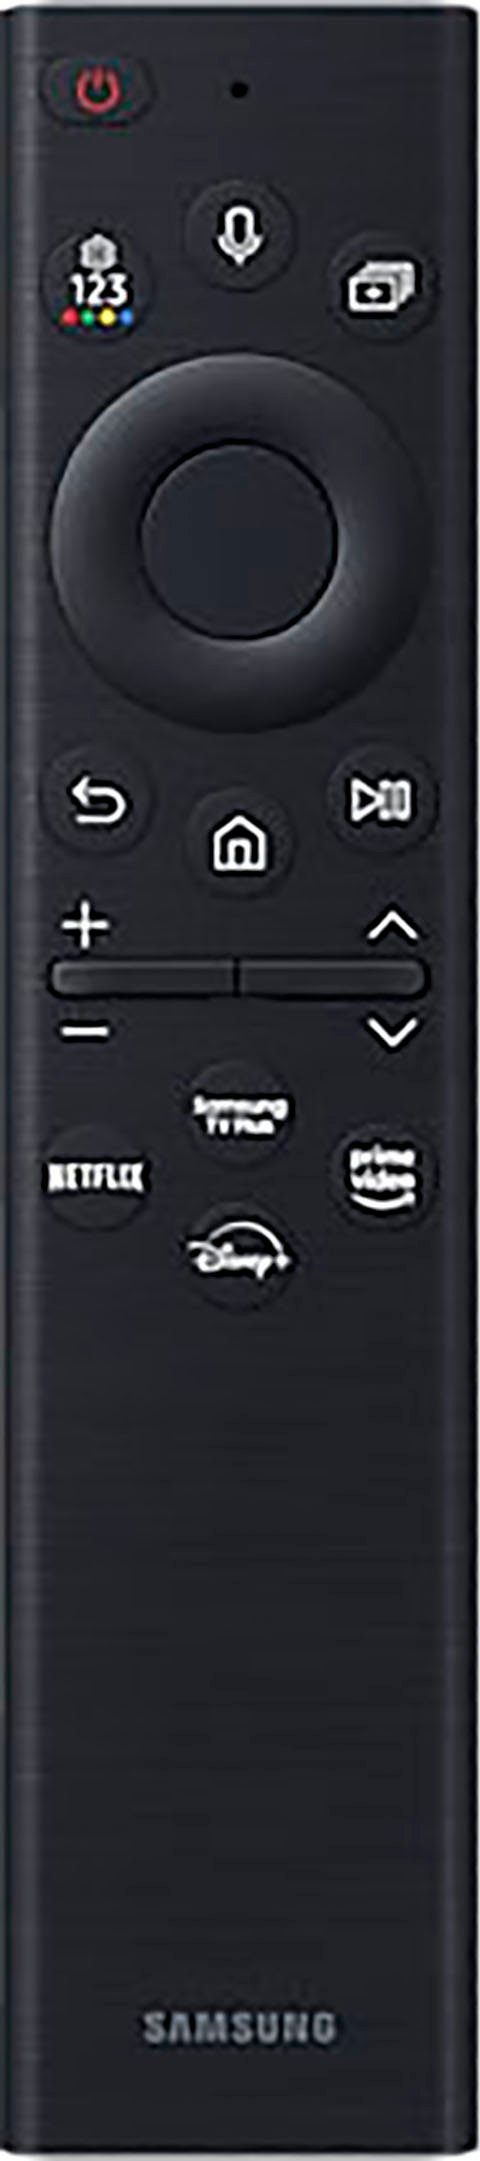 Samsung Odyssey Ark S55BG970NU Curved-Gaming-LED-Monitor Ultra LED) x 3840 Hz, 1 Reaktionszeit, cm/55 165 VA ms px, (138 HD, ", 4K 2160